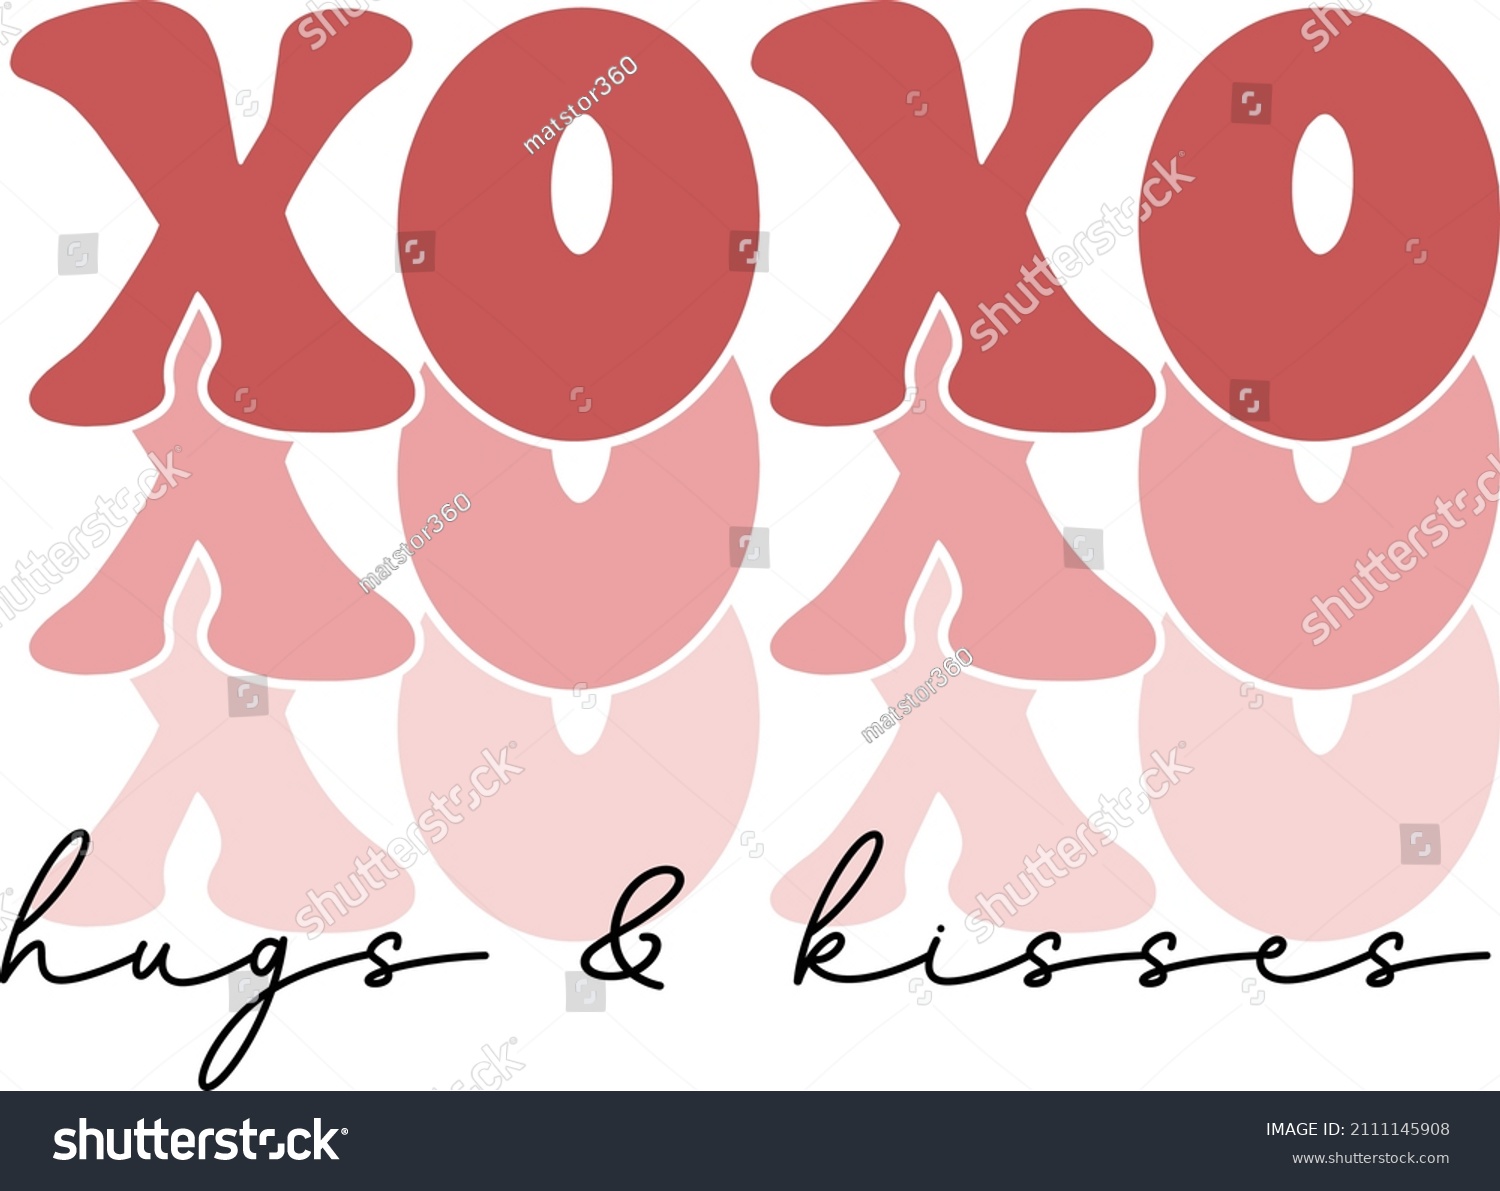 SVG of xoxo hugs  kisses t shirt design  svg